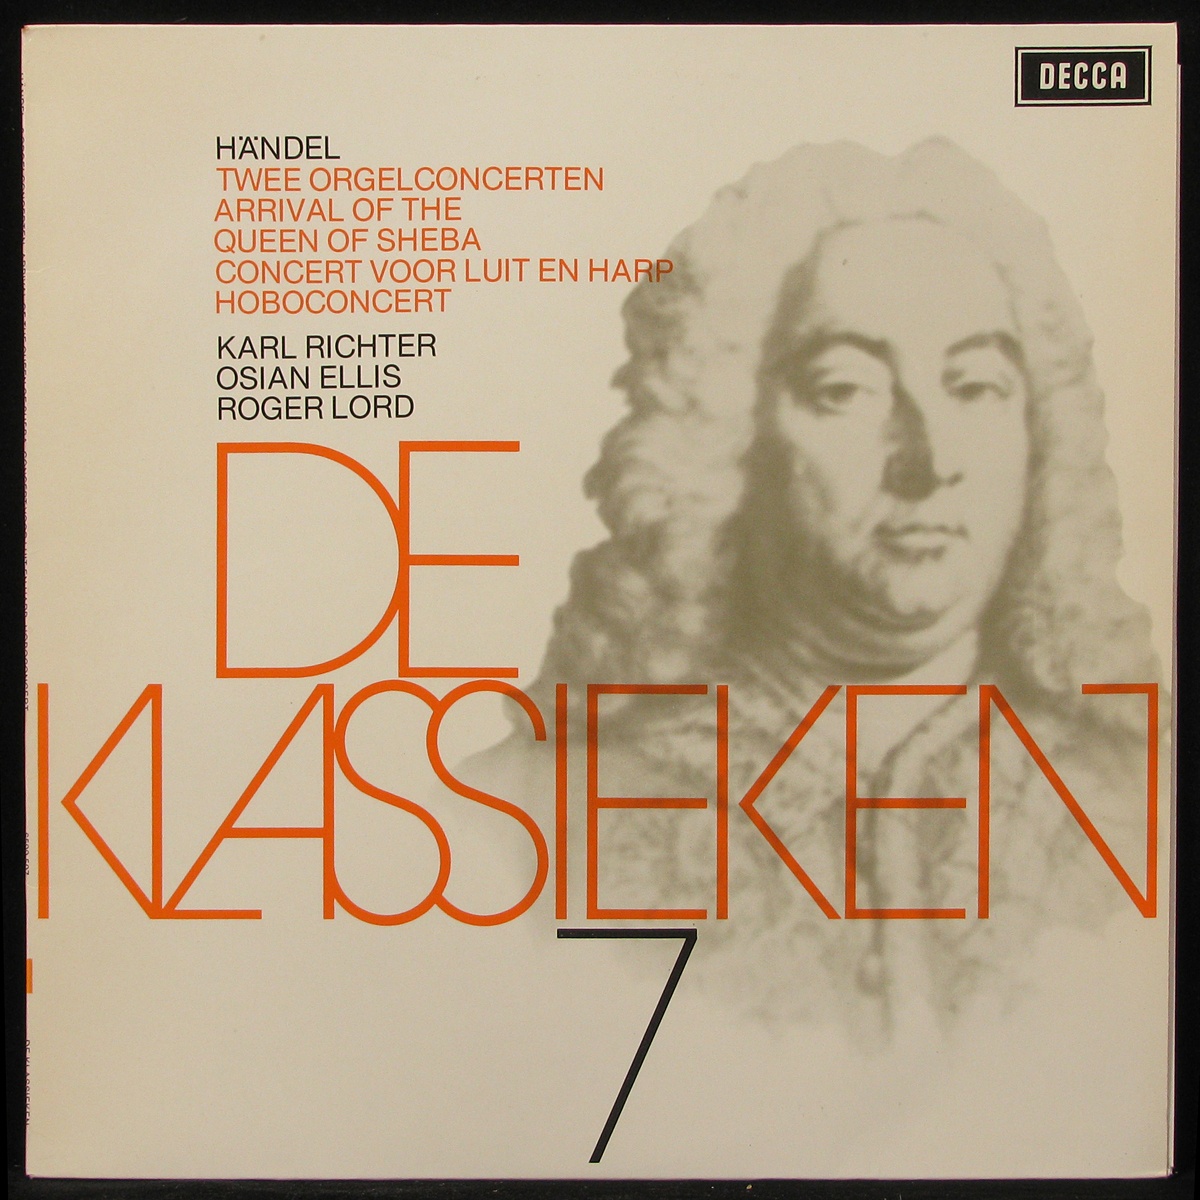 LP Karl Richter / Osian Ellis / Roger Lord + V/A — De Klassieken 7 - Handel: 2 Orgelconcerten, Arrival Of The Queen Of Sheba фото